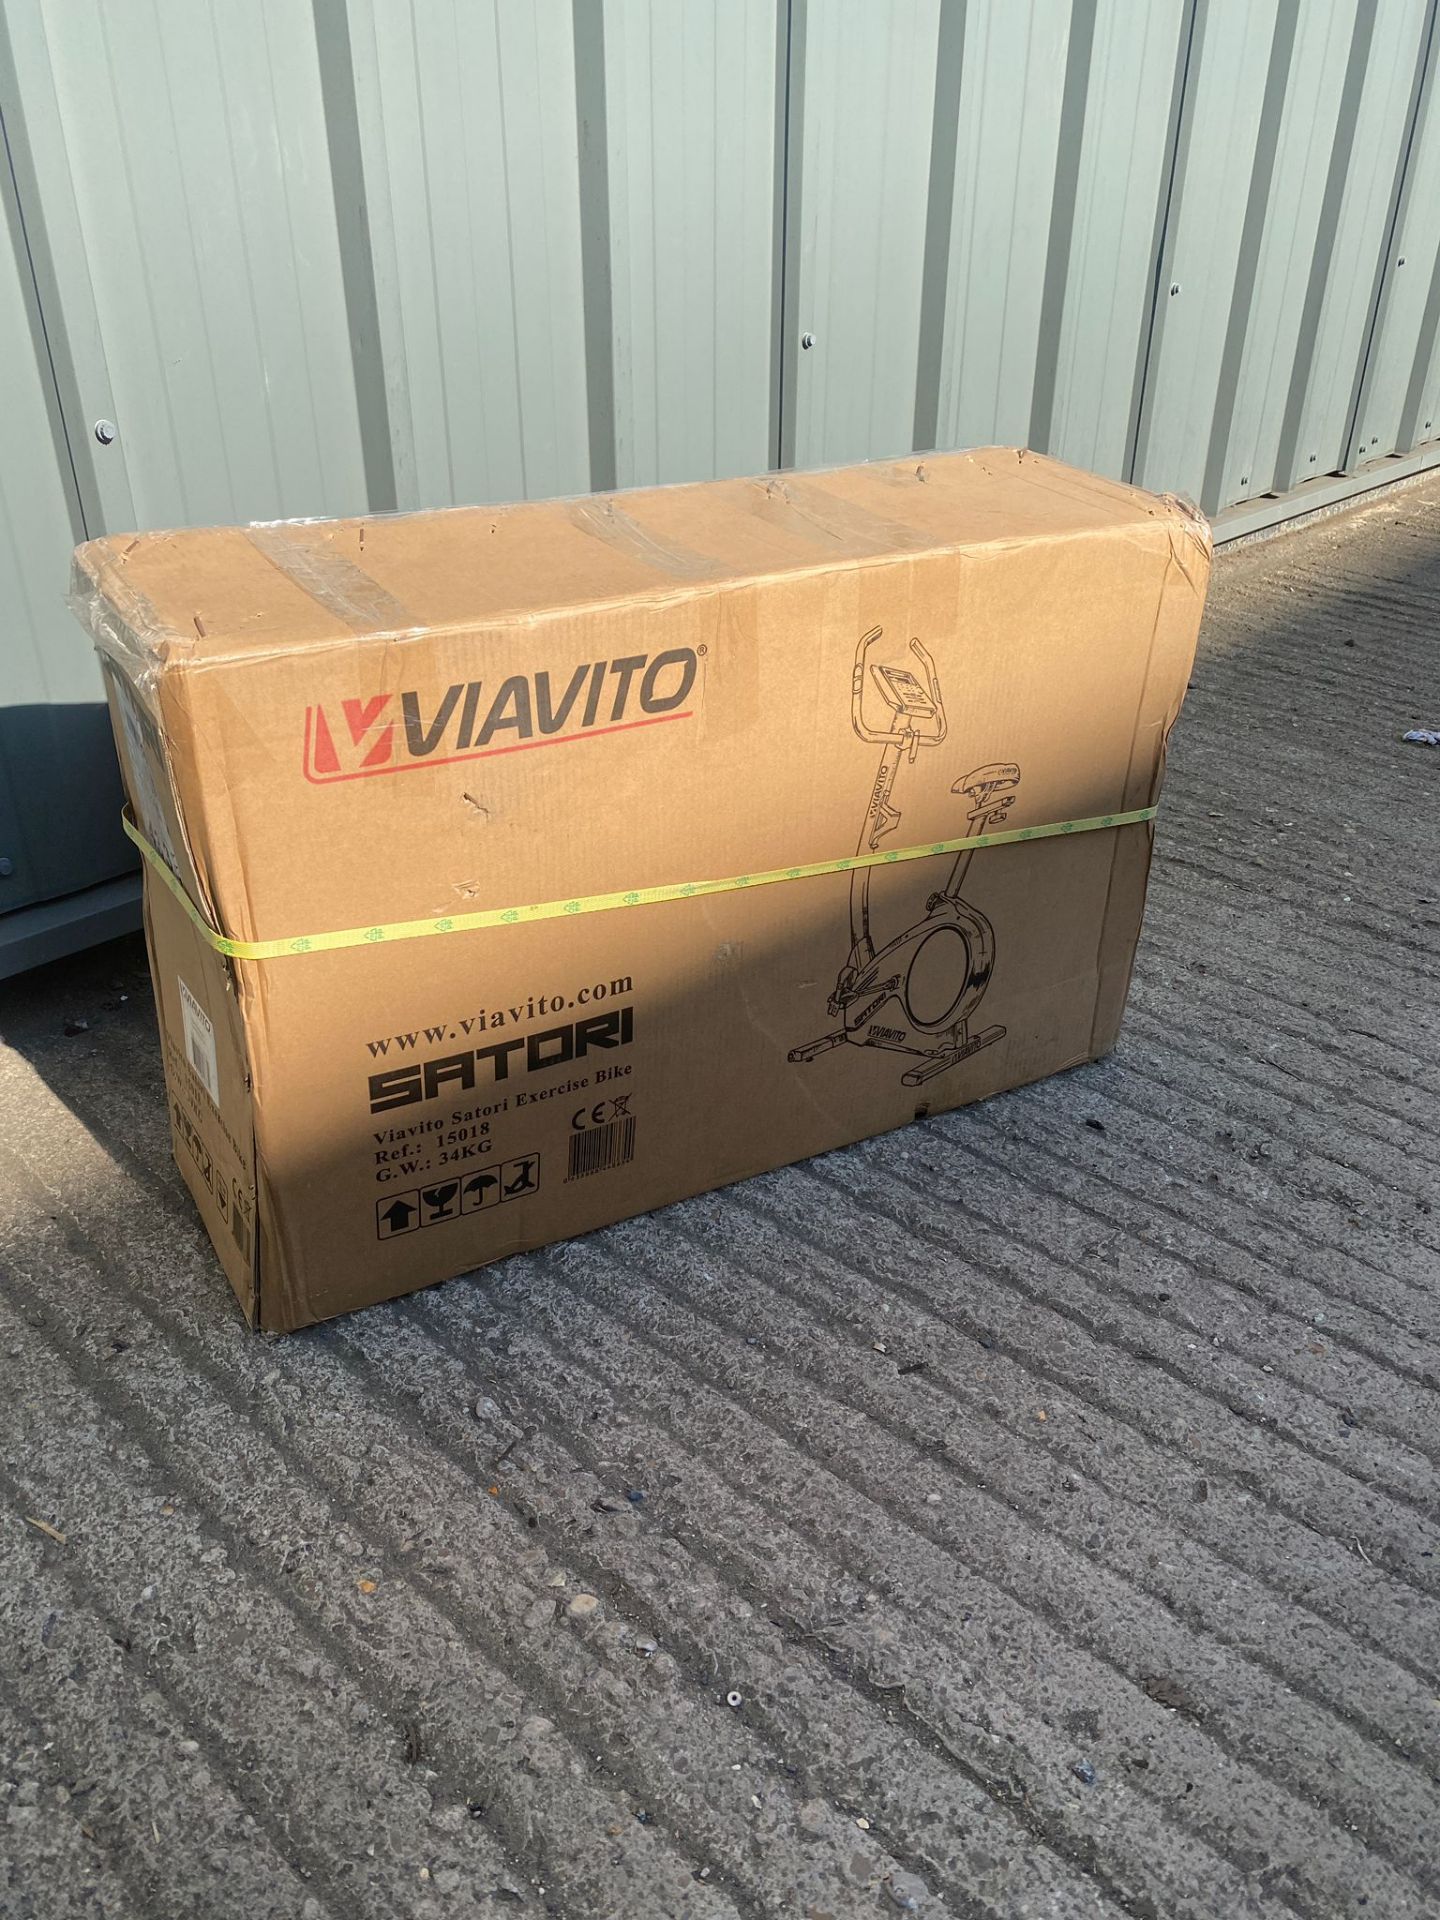 Viavito Satori Bike (boxed) *PLUS VAT* - Image 4 of 4